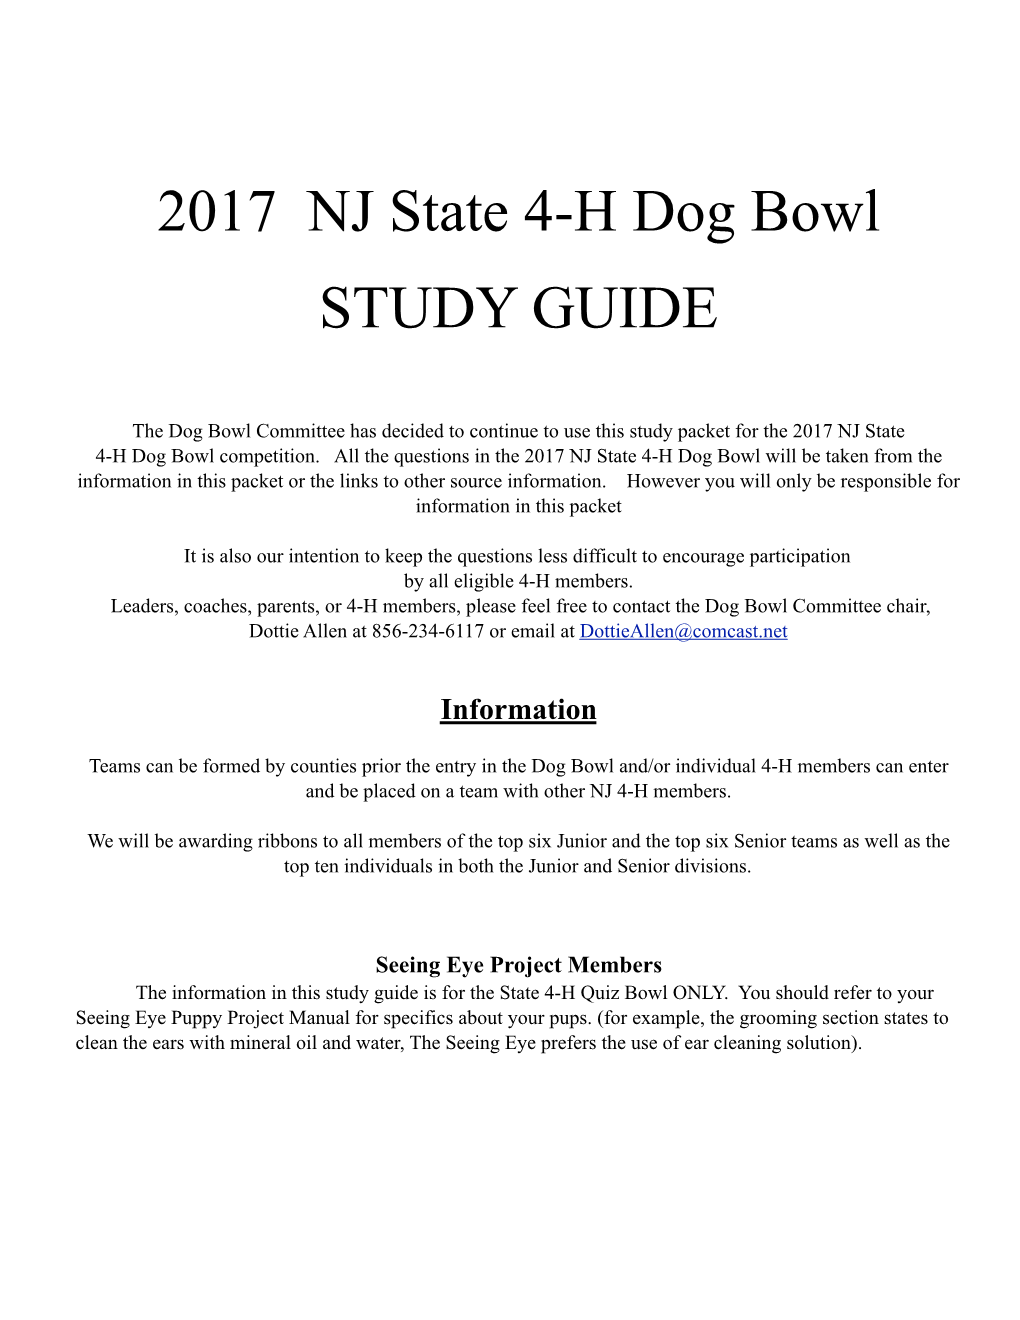 2017 Dog Bowl Study Packet